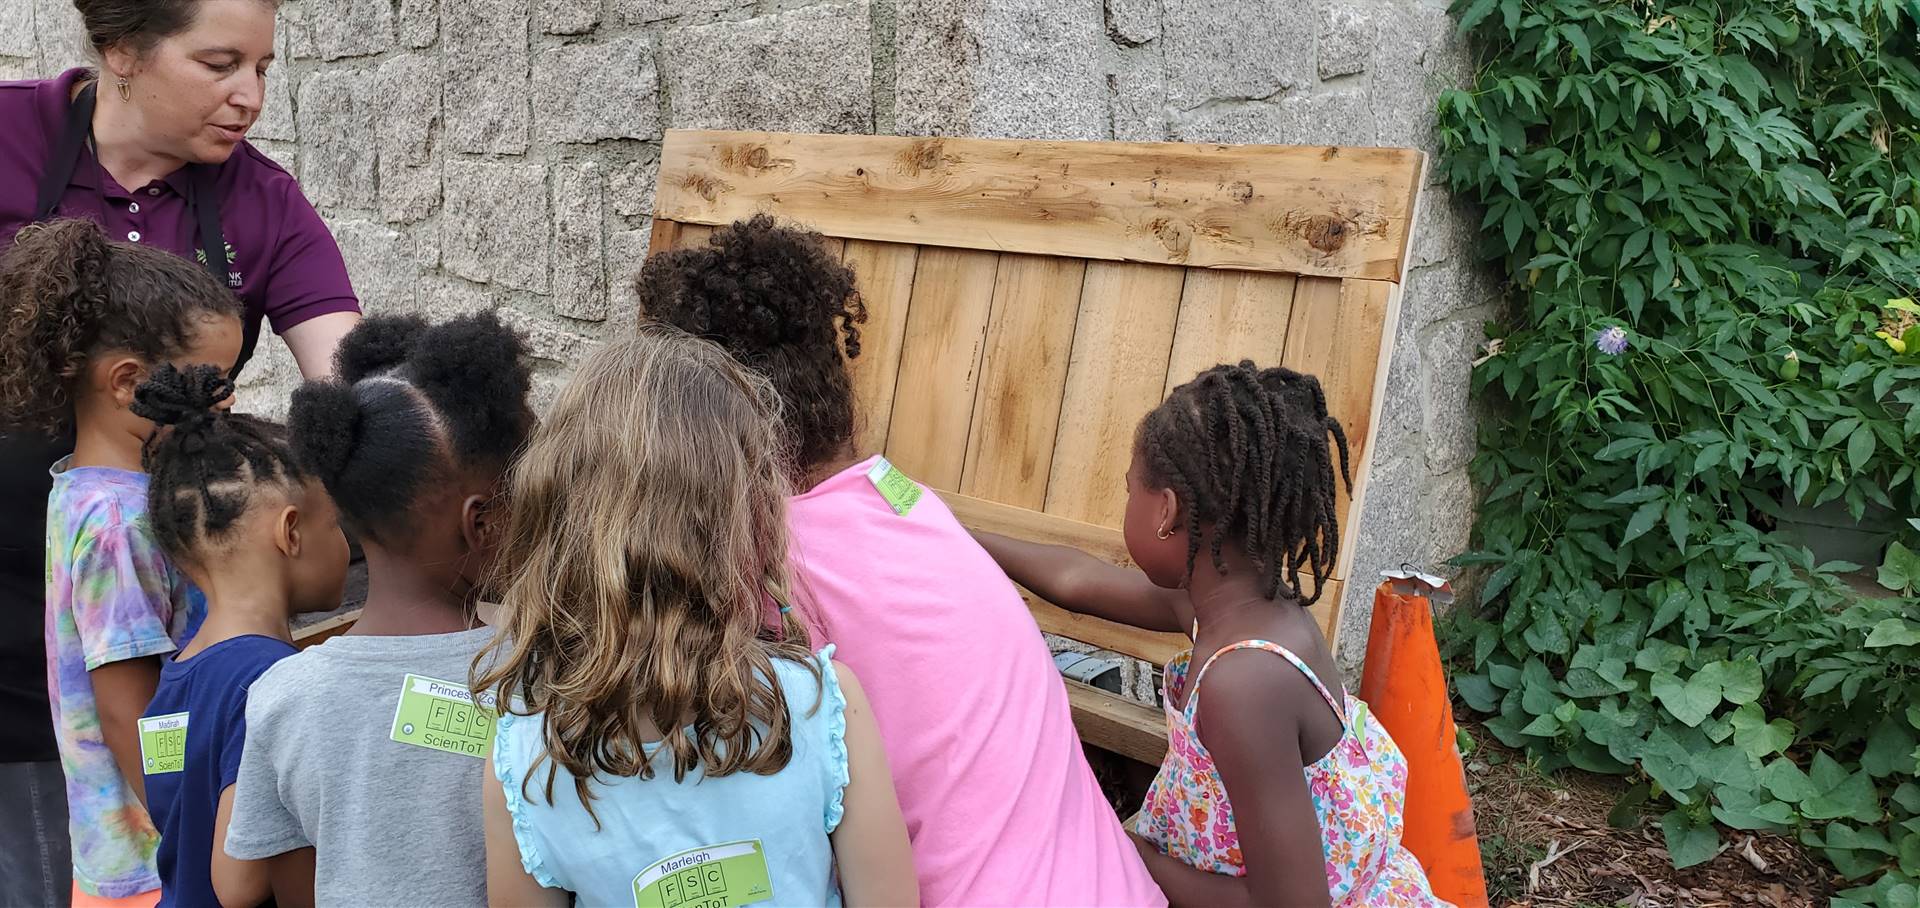 children looking in a compost bin